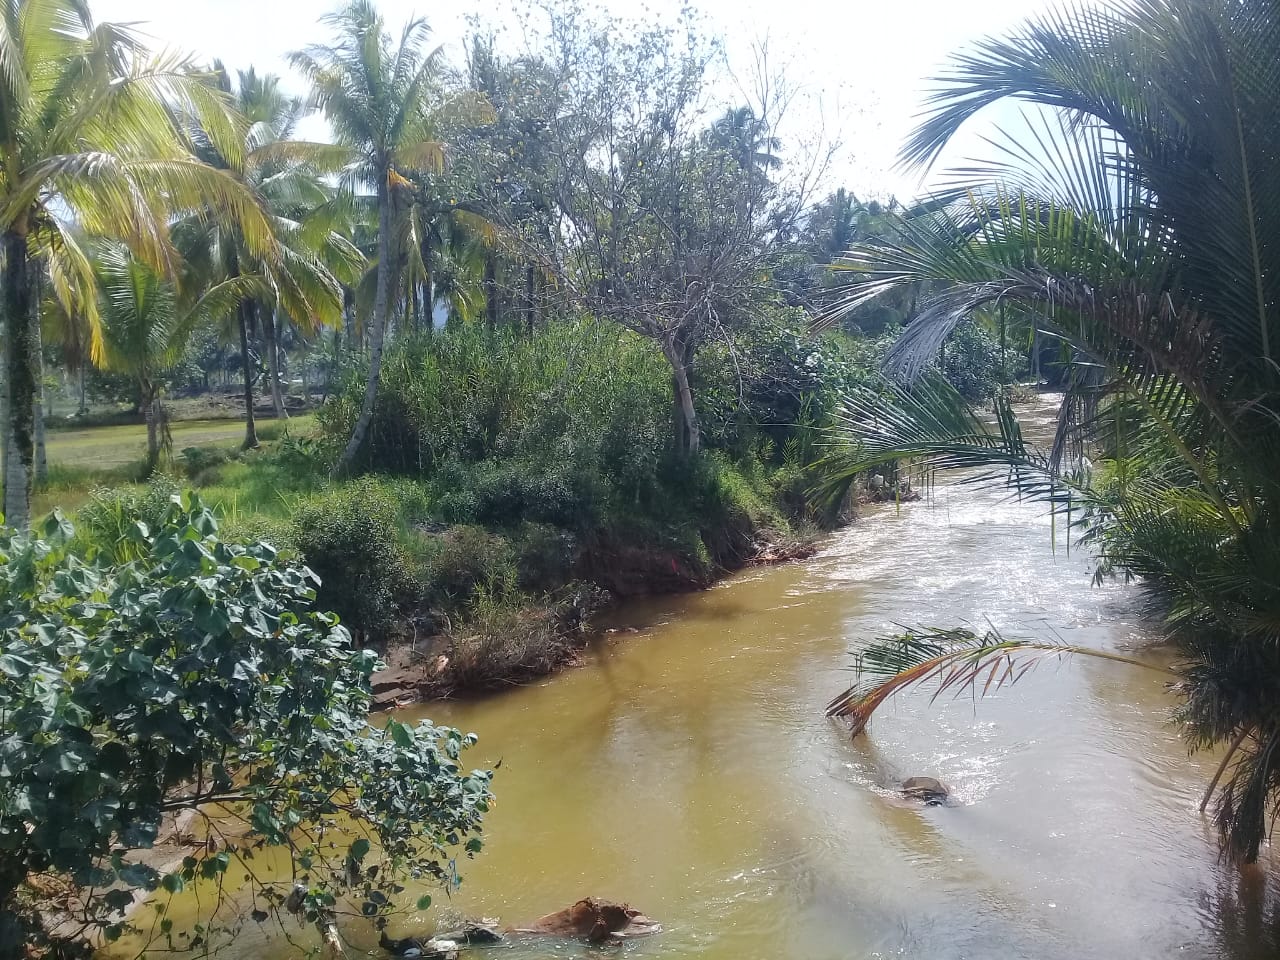 Sawah Kerap Kebanjiran, Petani Tagih Janji Pembangunan Bronjong 